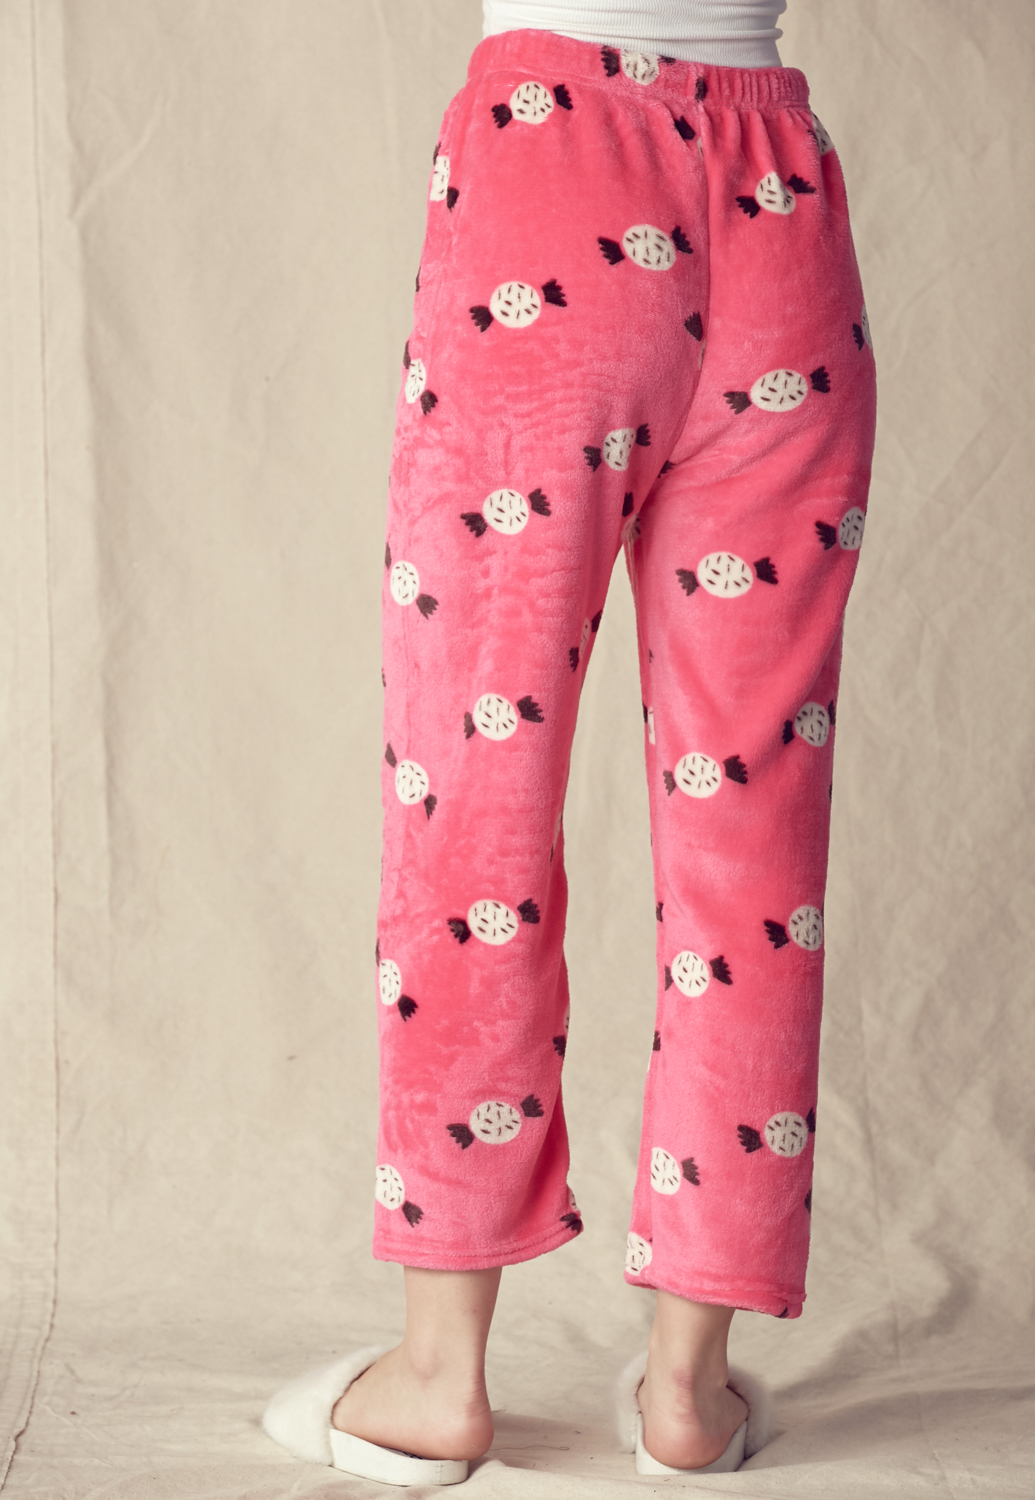 Fuzzy Pajama Pants